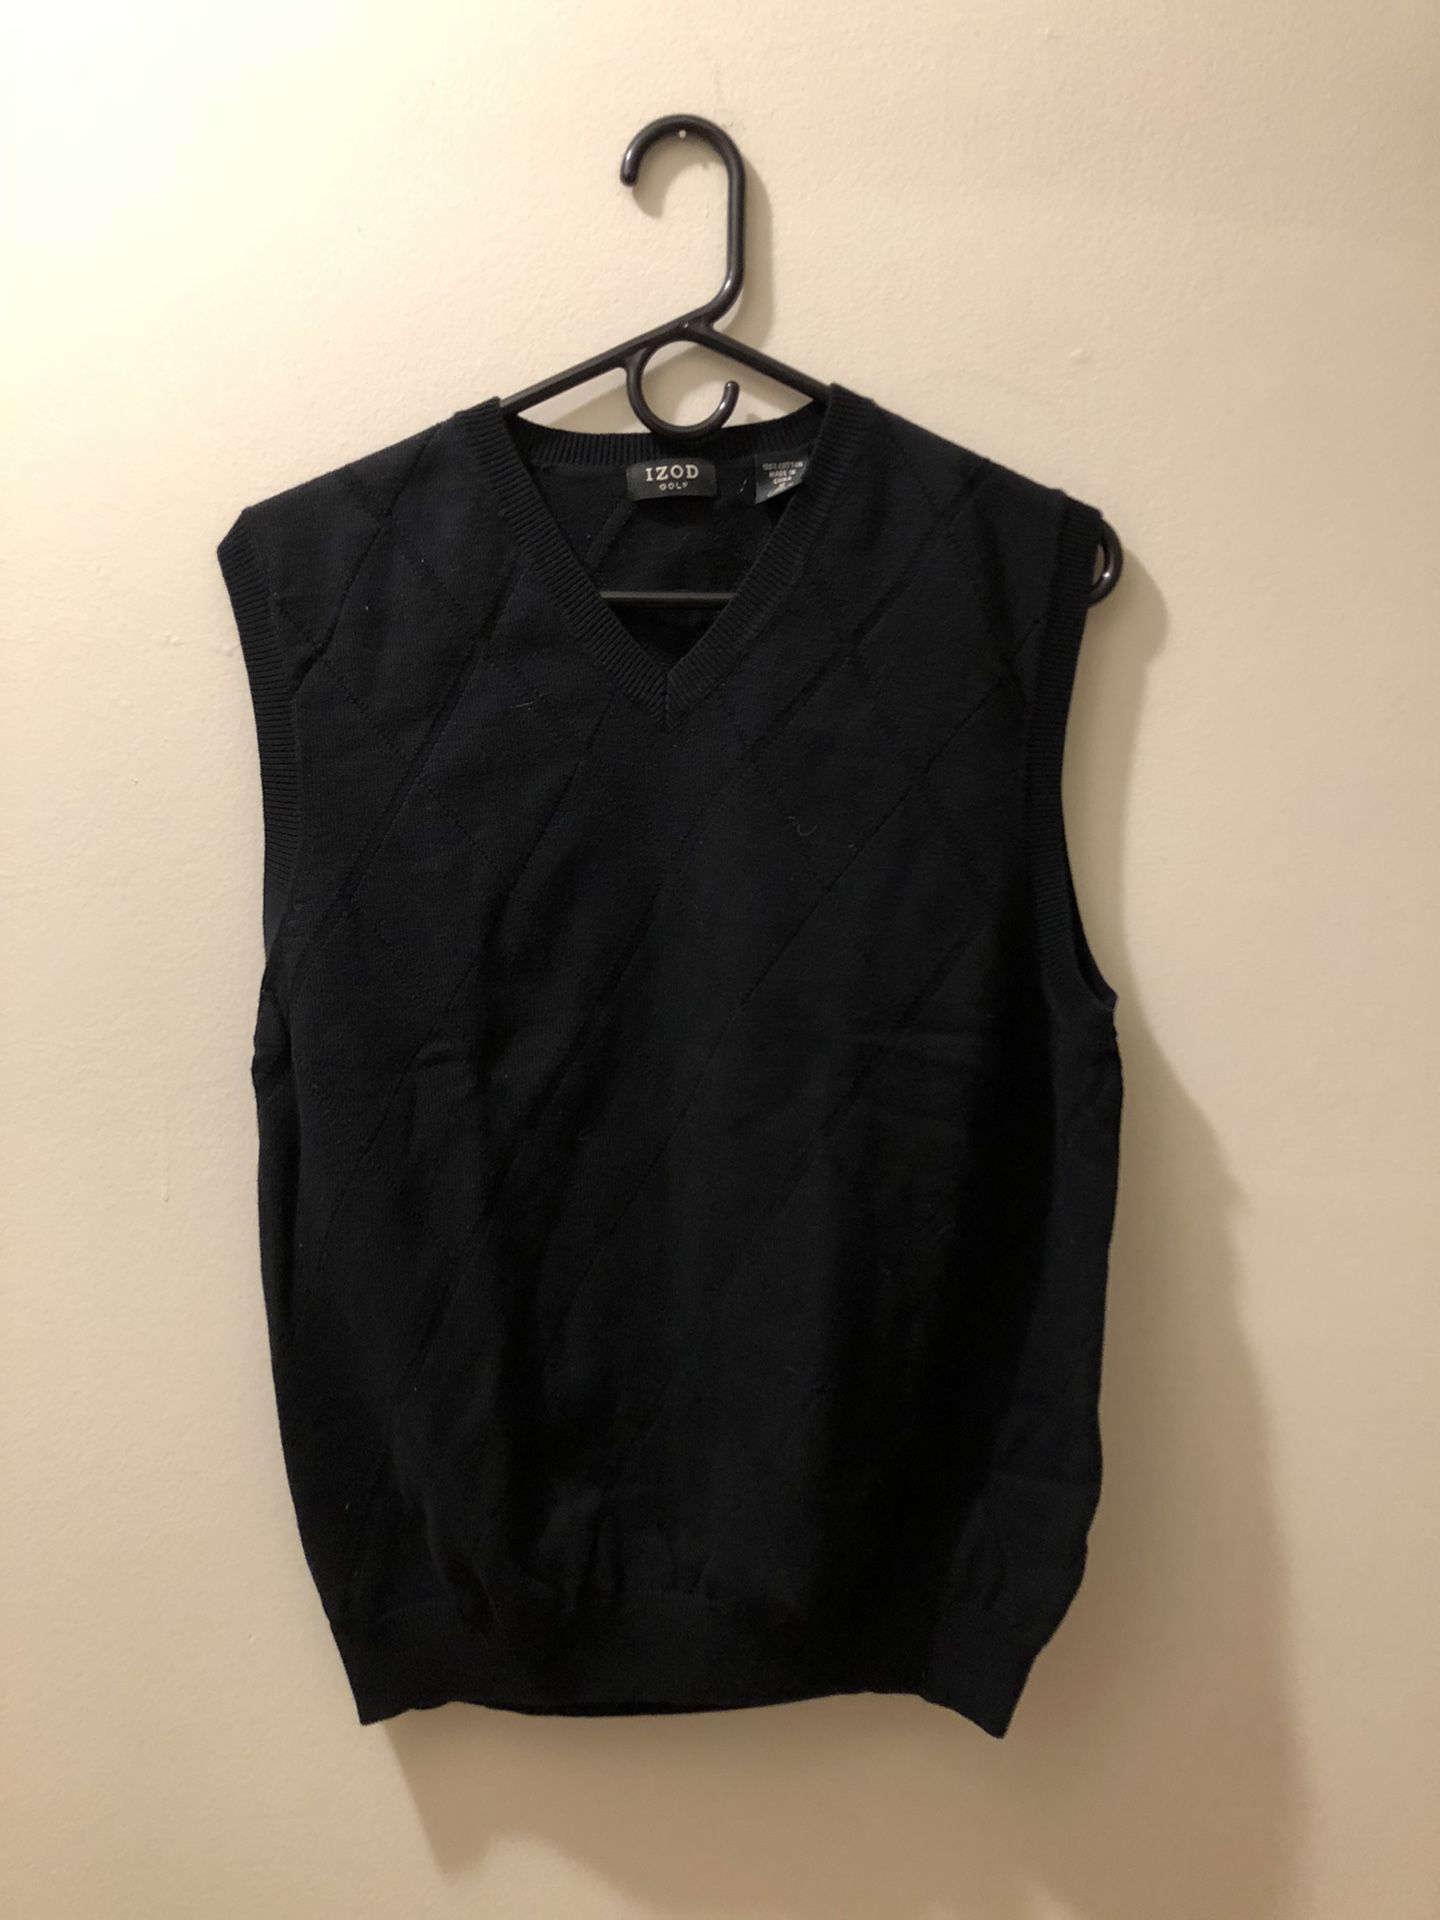 Vintage 80’s IZOD Mens Sweater Vest Black Size M Sleeveless Pullover